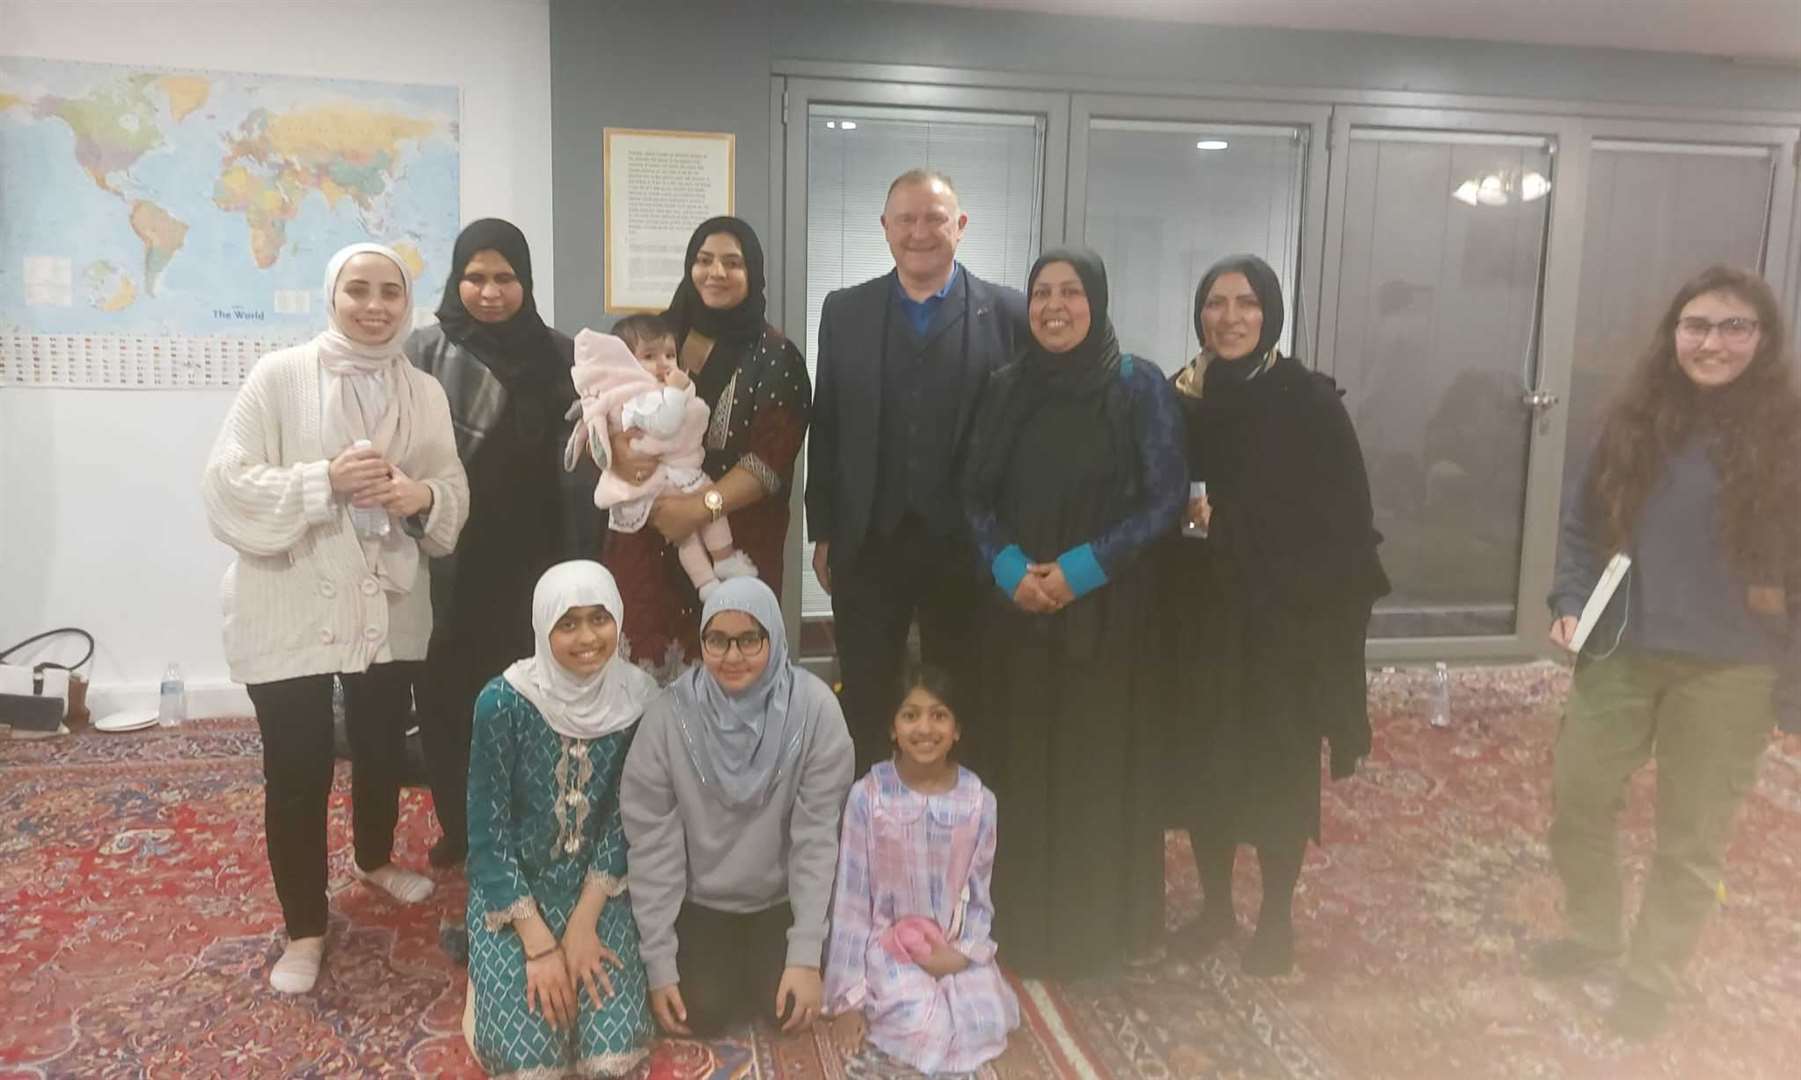 Haneen Basim abu-haikal (far left) and other women from the Masjid meet MP Drew Hendry.